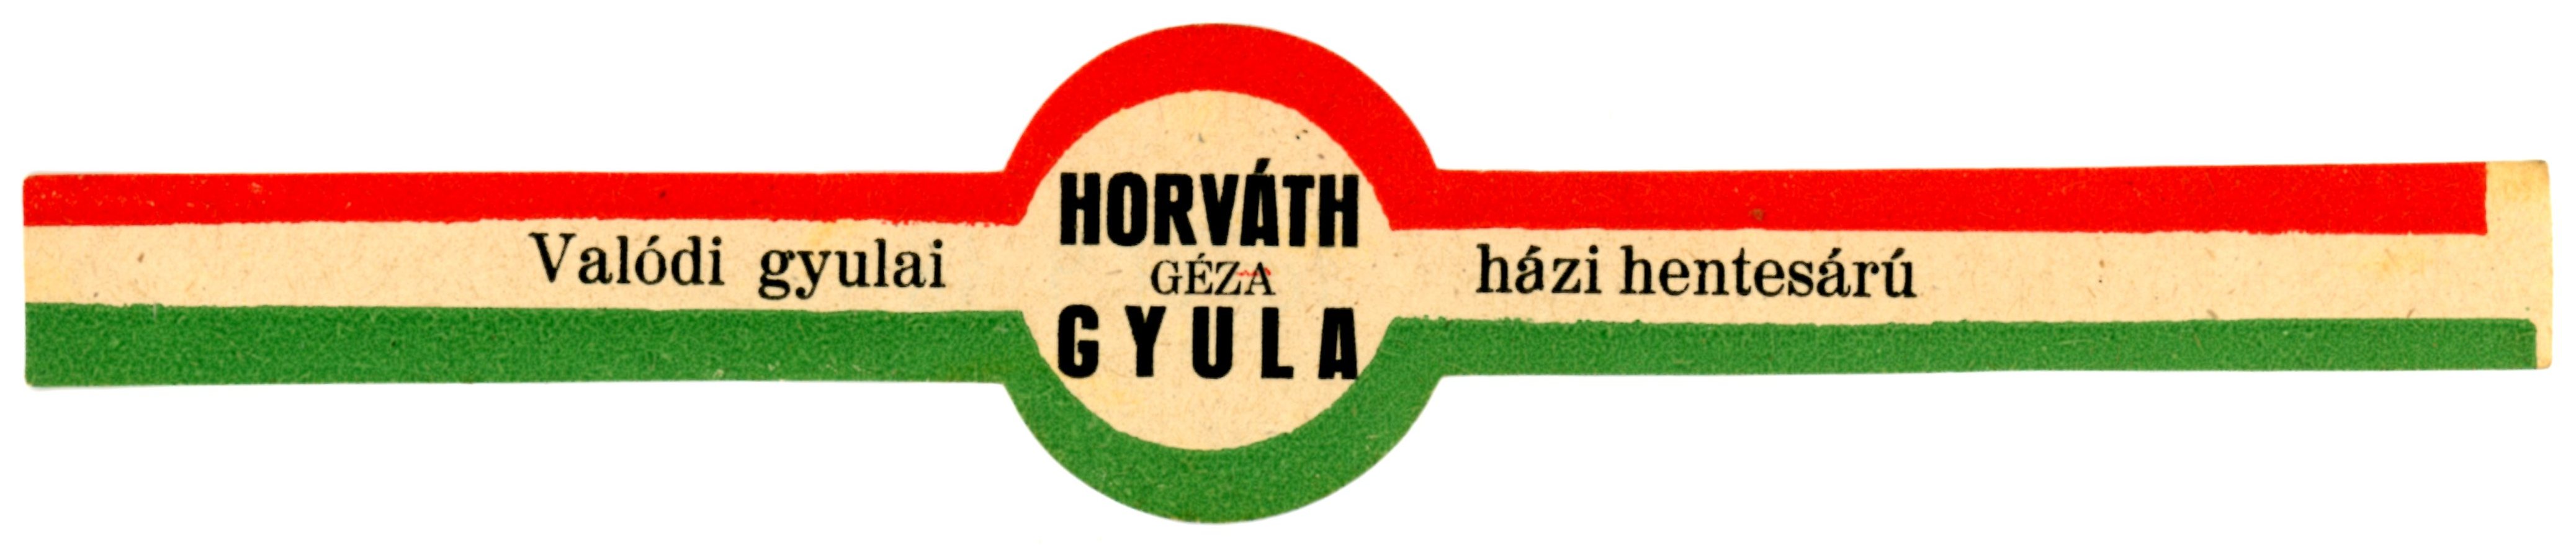 Címke (Erkel Ferenc Múzeum CC BY-NC-SA)